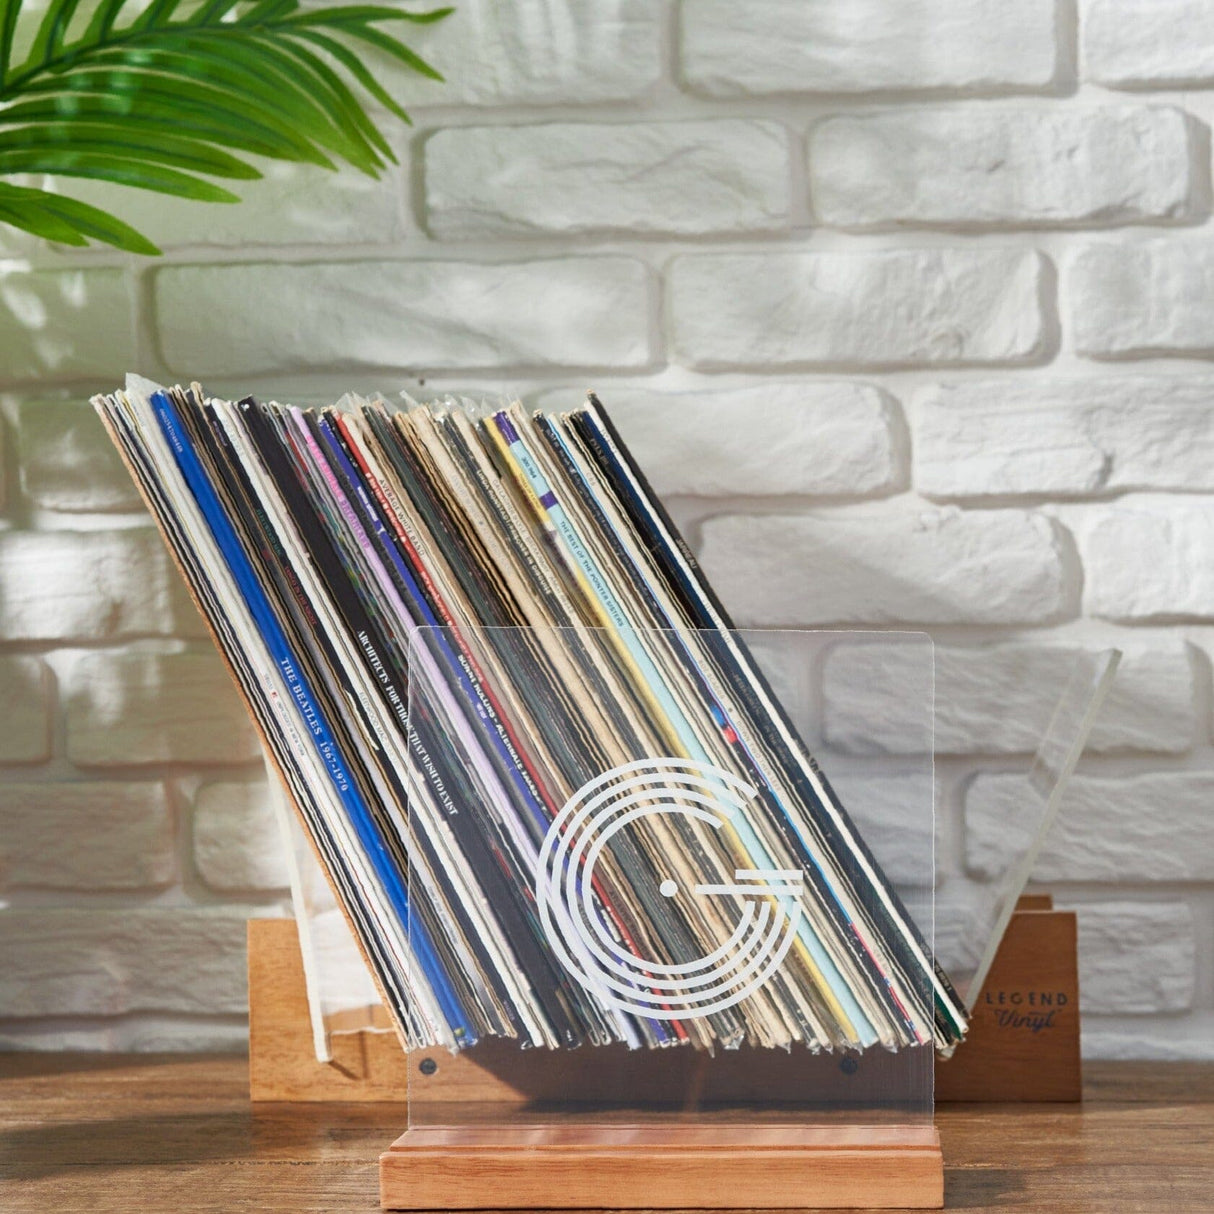 Legend Vinyl LP Display Record Stand “Now Playing” - K&B Audio